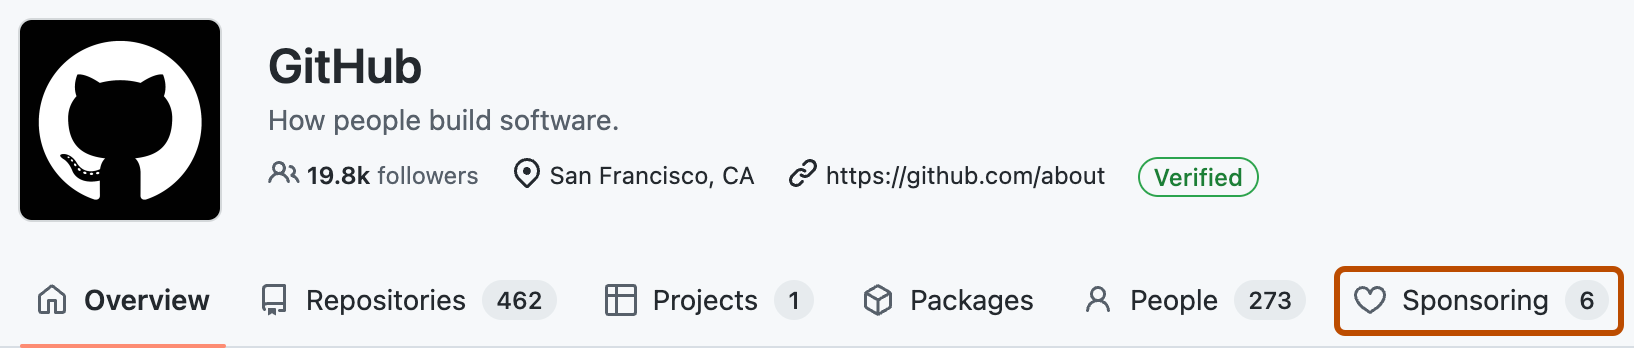 "GitHub" 조직의 홈페이지 스크린샷 "후원"이라는 레이블이 지정된 메뉴 탭이 진한 주황색 윤곽선으로 표시되어 있습니다.